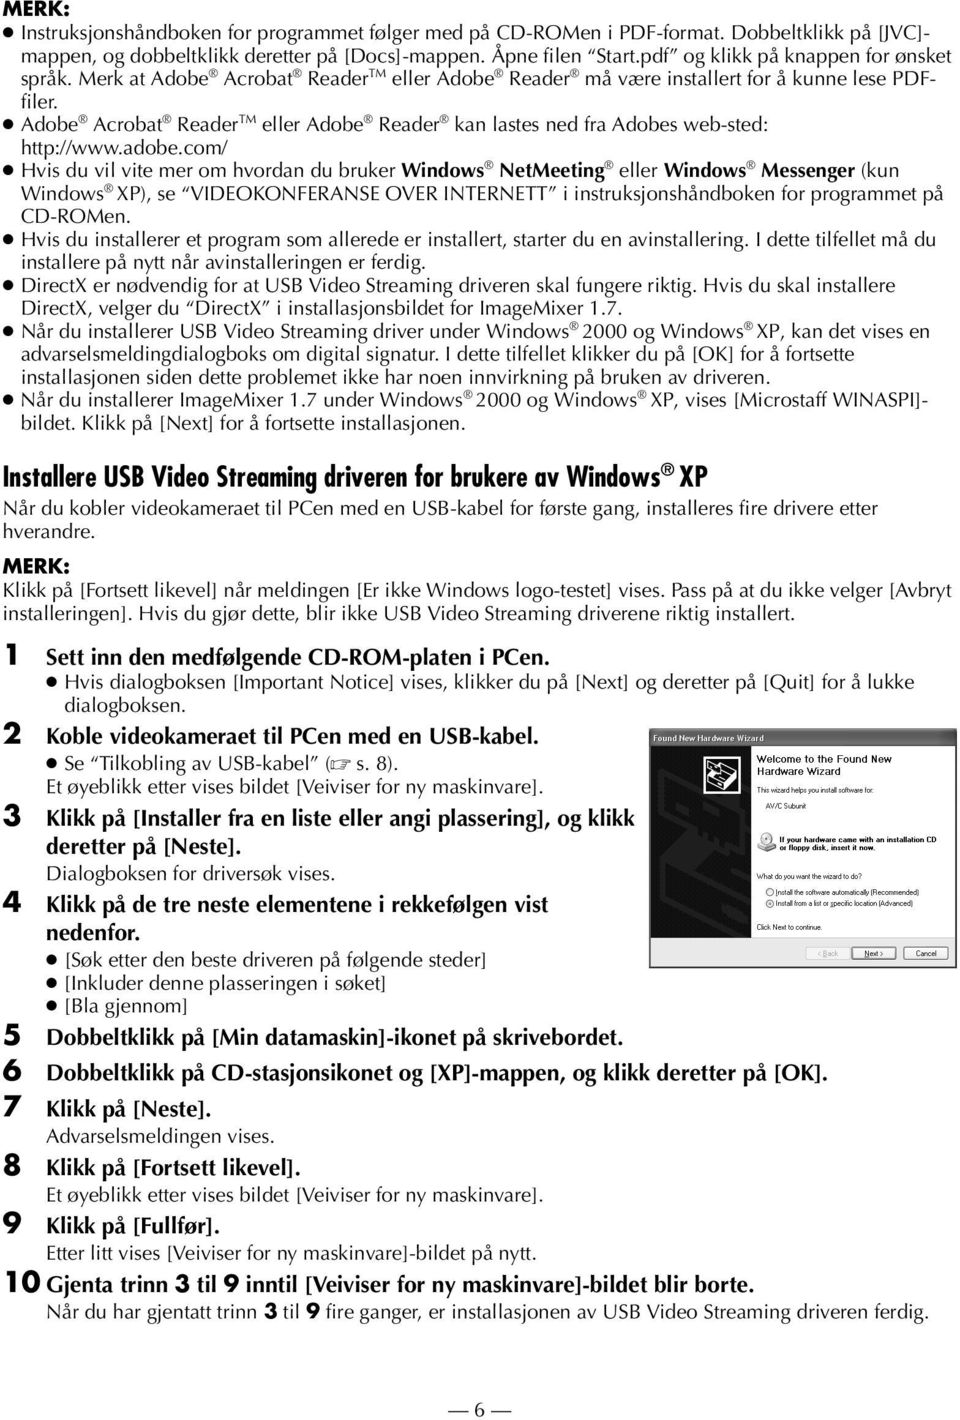 Adobe Acrobat Reader TM eller Adobe Reader kan lastes ned fra Adobes web-sted: http://www.adobe.